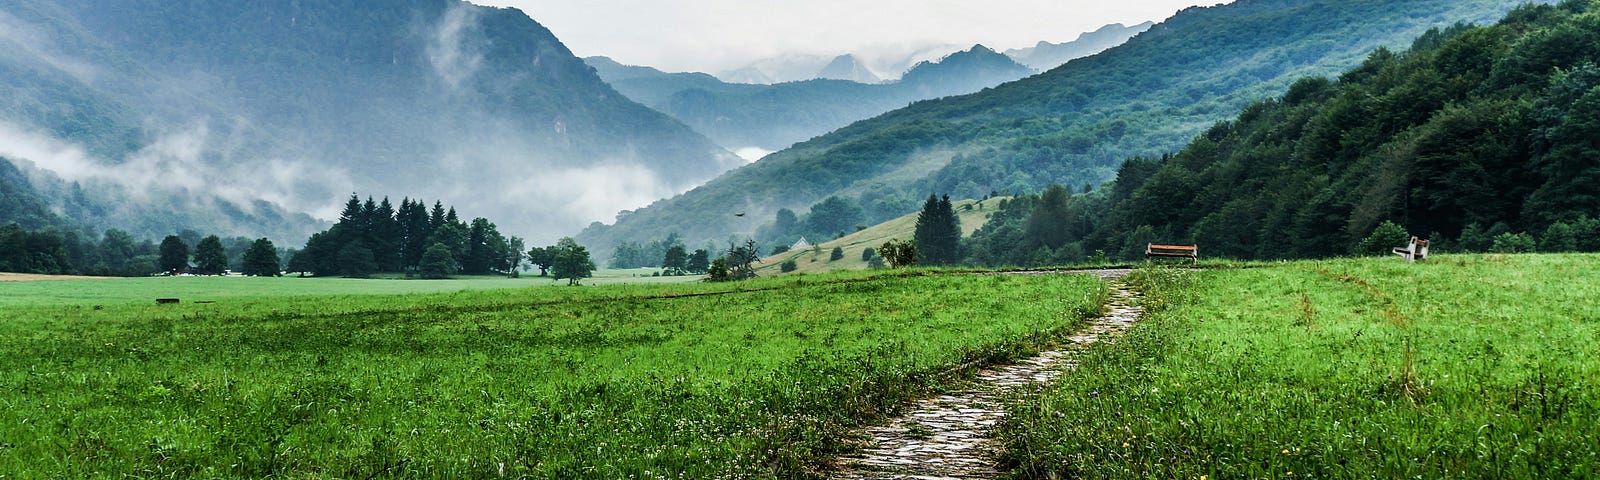 A stone trail, leading through lush grass land with mountains on the horizon.